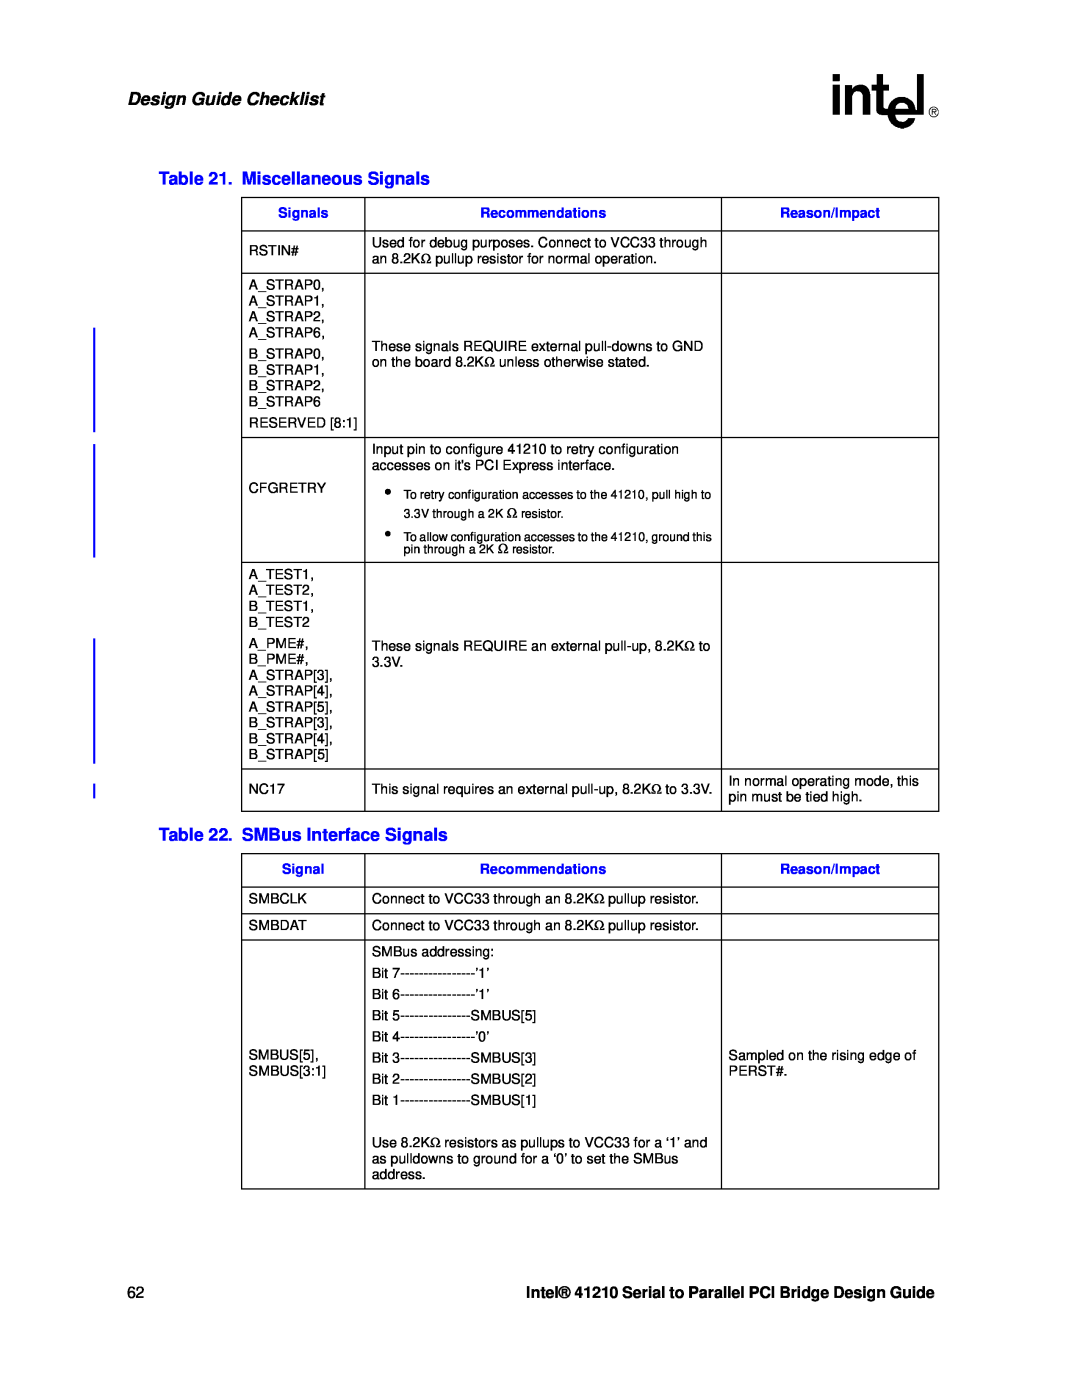 Intel 41210 manual Miscellaneous Signals, SMBus Interface Signals, Design Guide Checklist, 3.3V through a 2K Ω resistor 